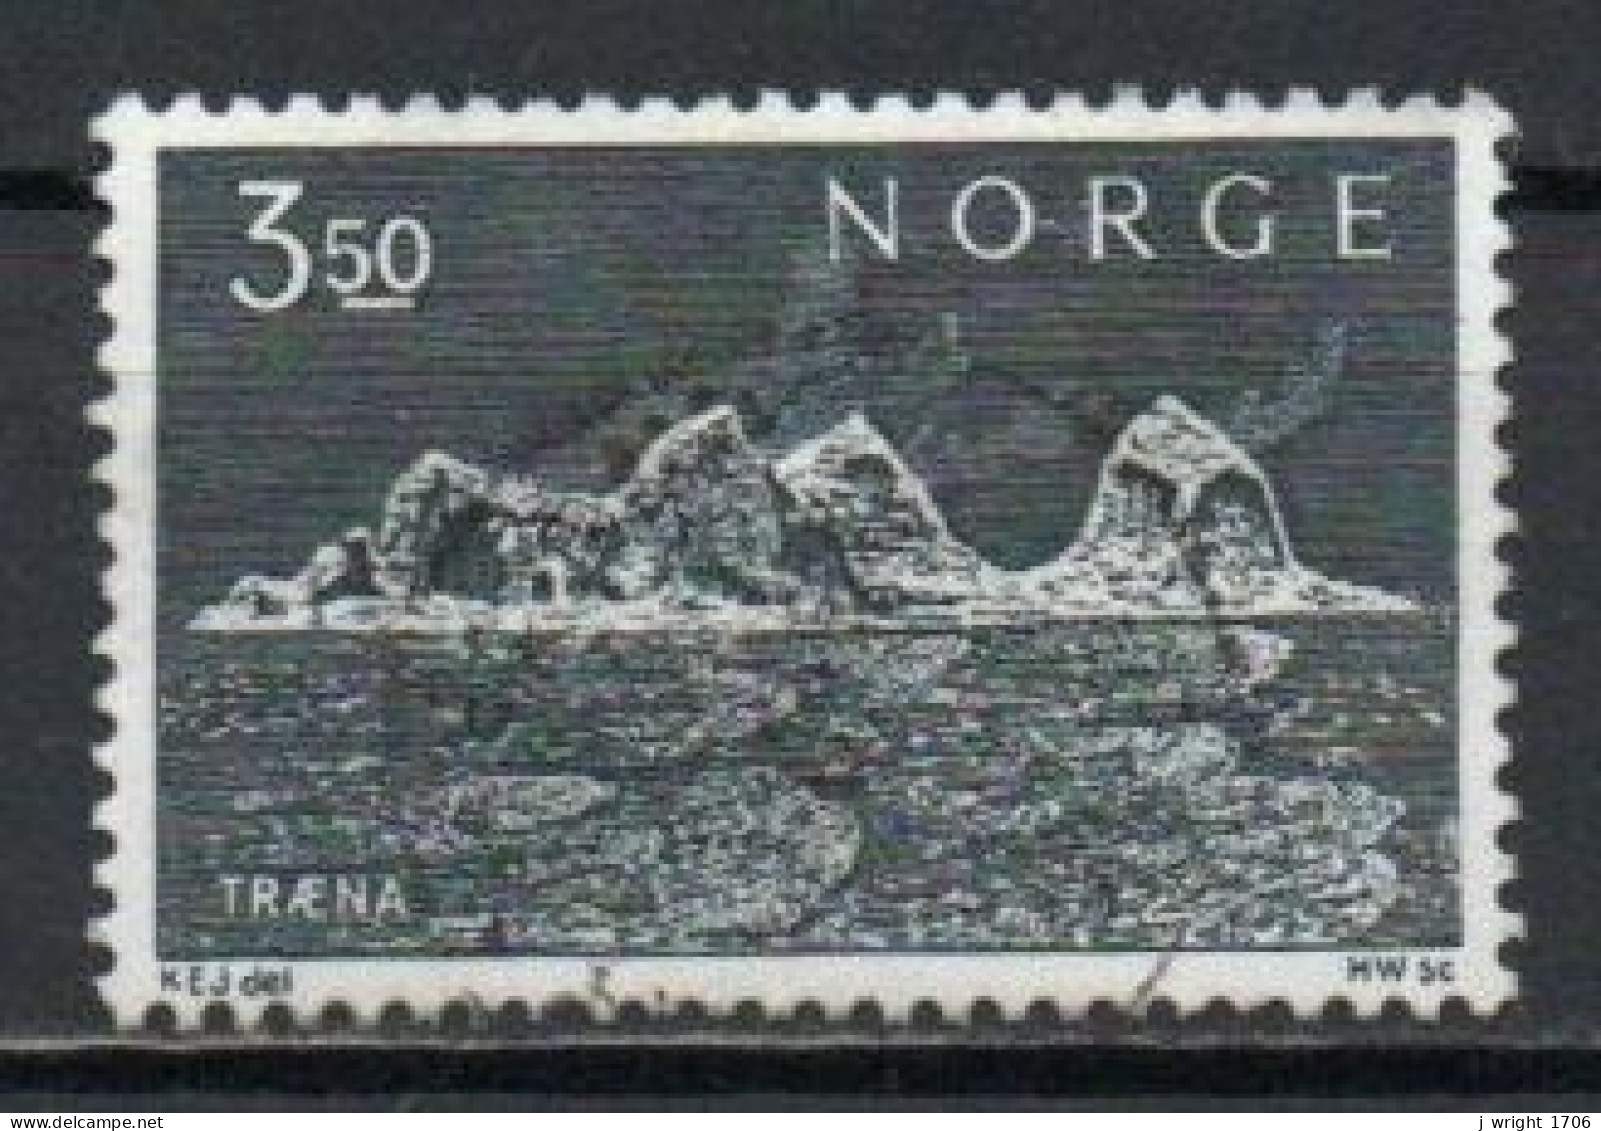 Norway, 1969, Traena Islands, Set, USED - Oblitérés